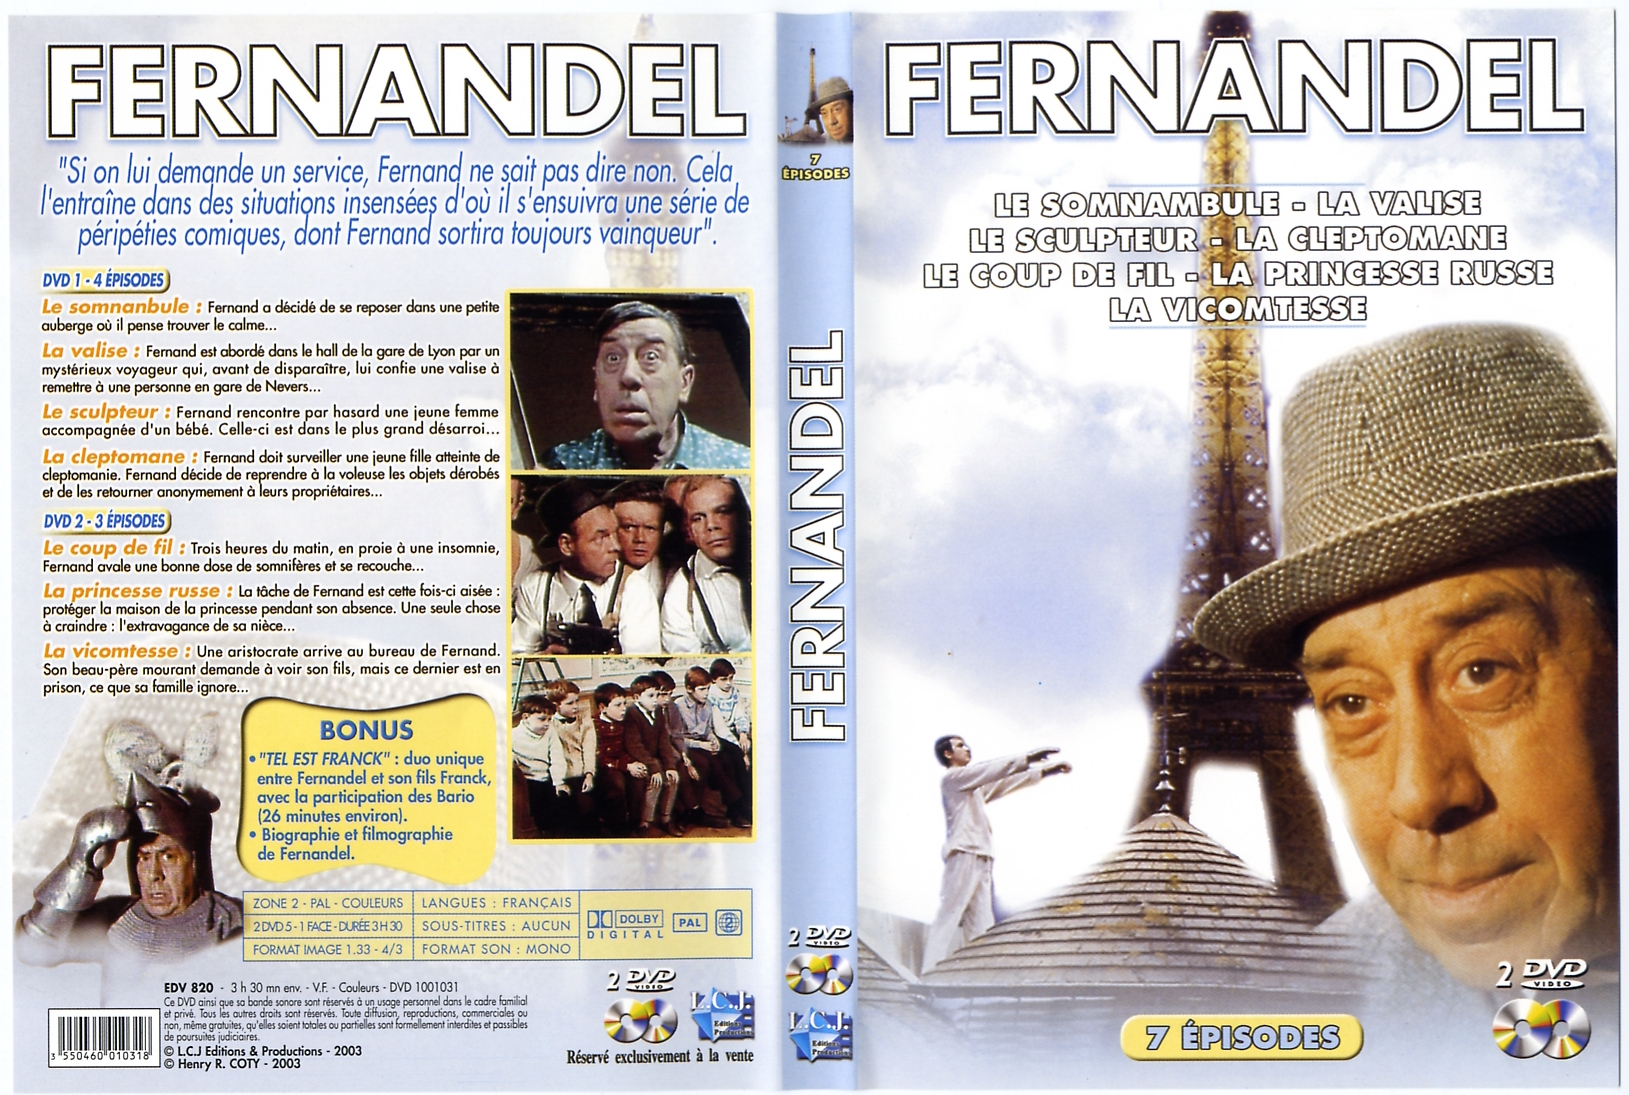 Jaquette DVD Fernandel